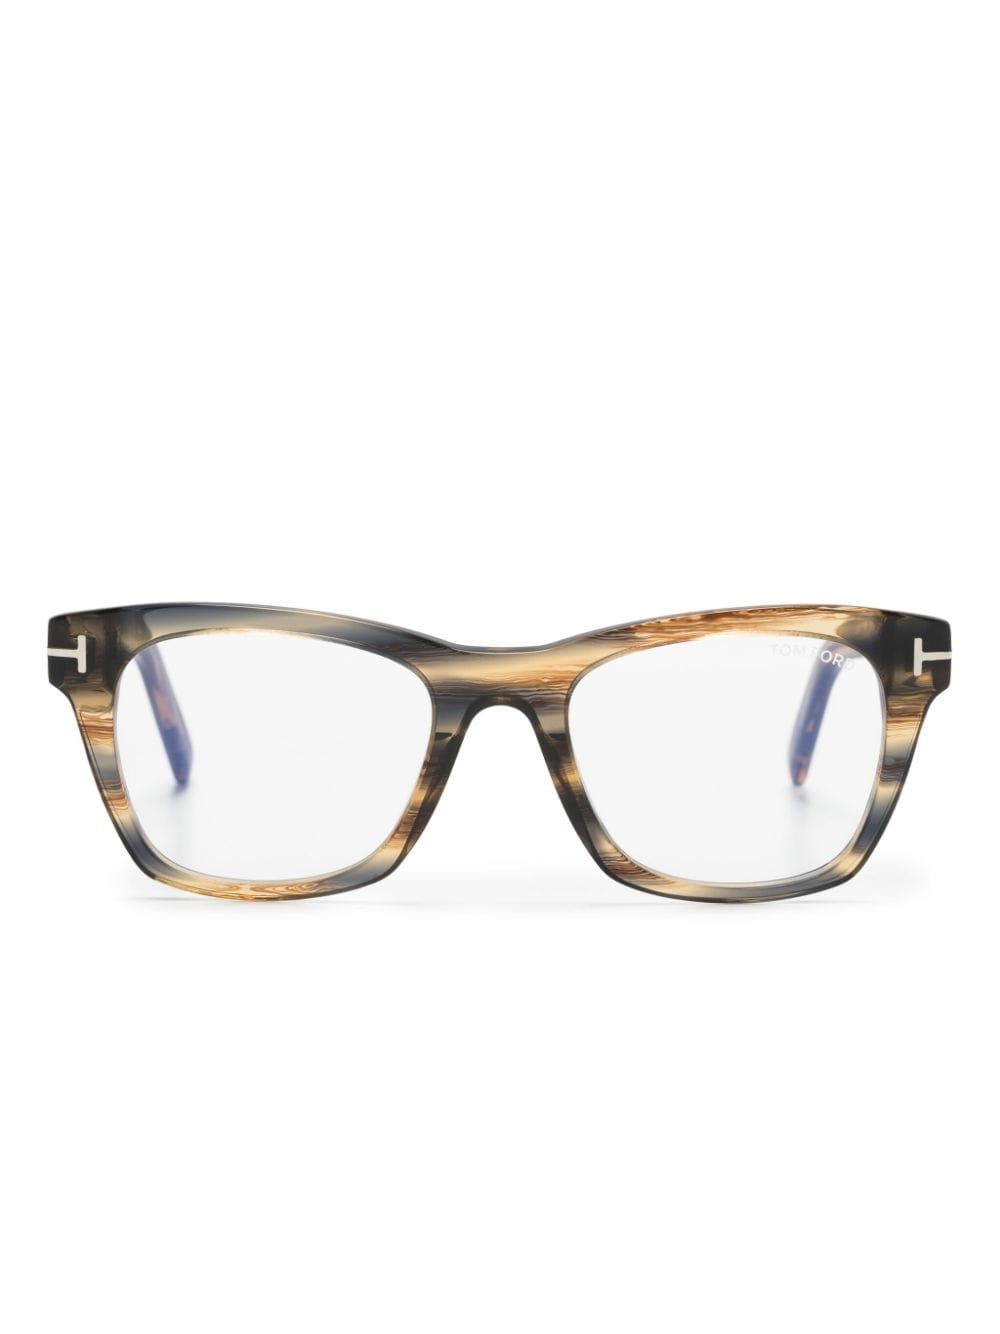 TOM FORD Eyewear tortoiseshell-effect round-frame optical glasses - Brown von TOM FORD Eyewear